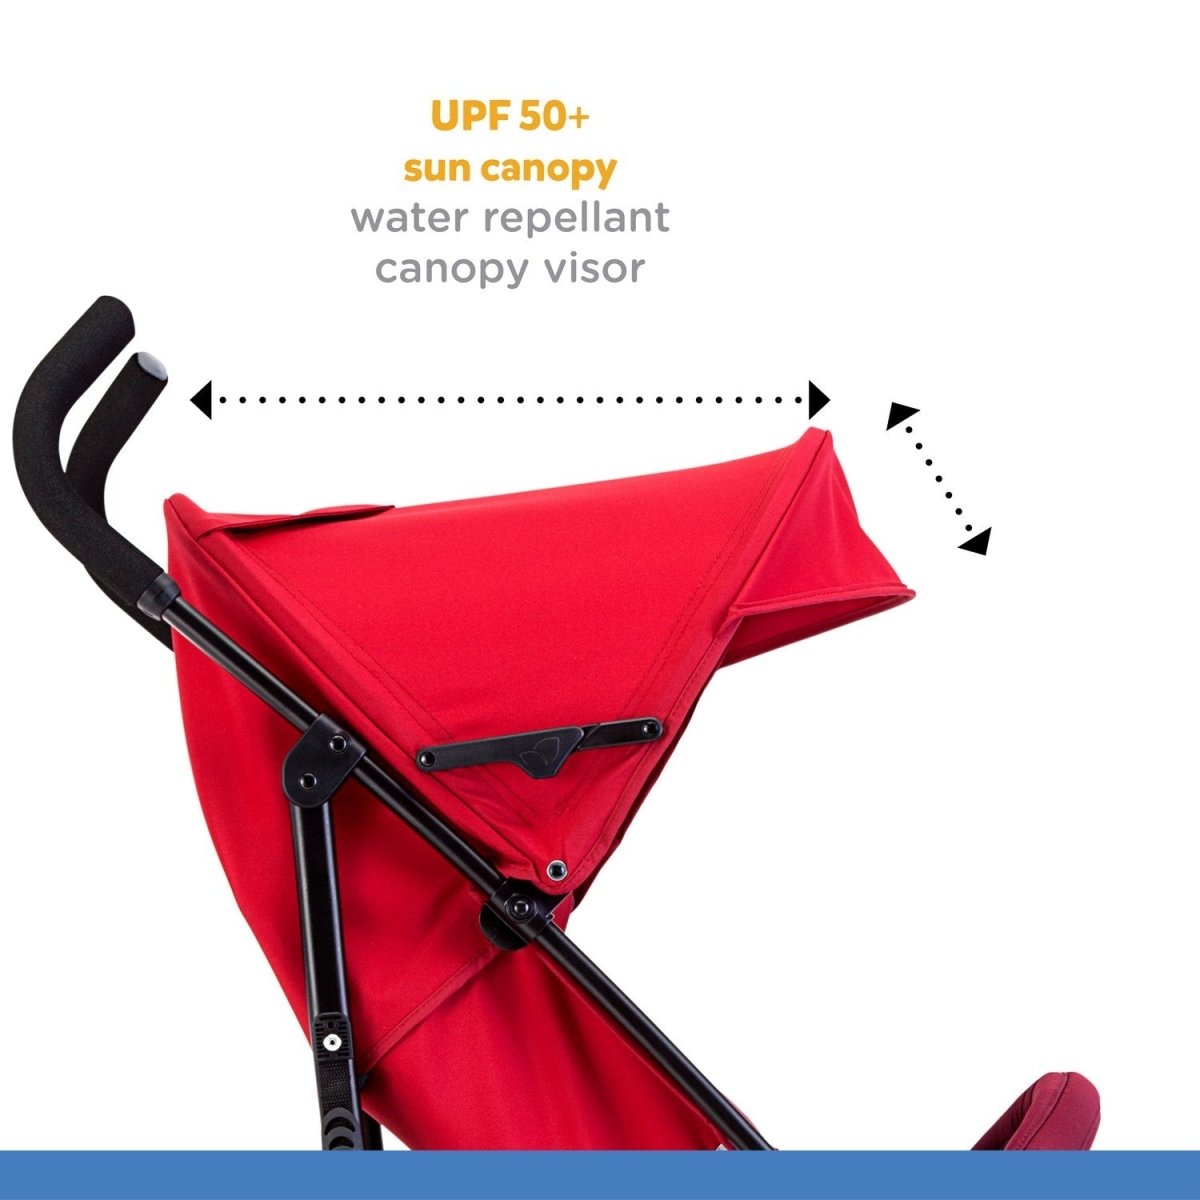 Joie Nitro lx Umbrella Stroller With Flat Reclining Seat- Cherry - S1036BACHR000